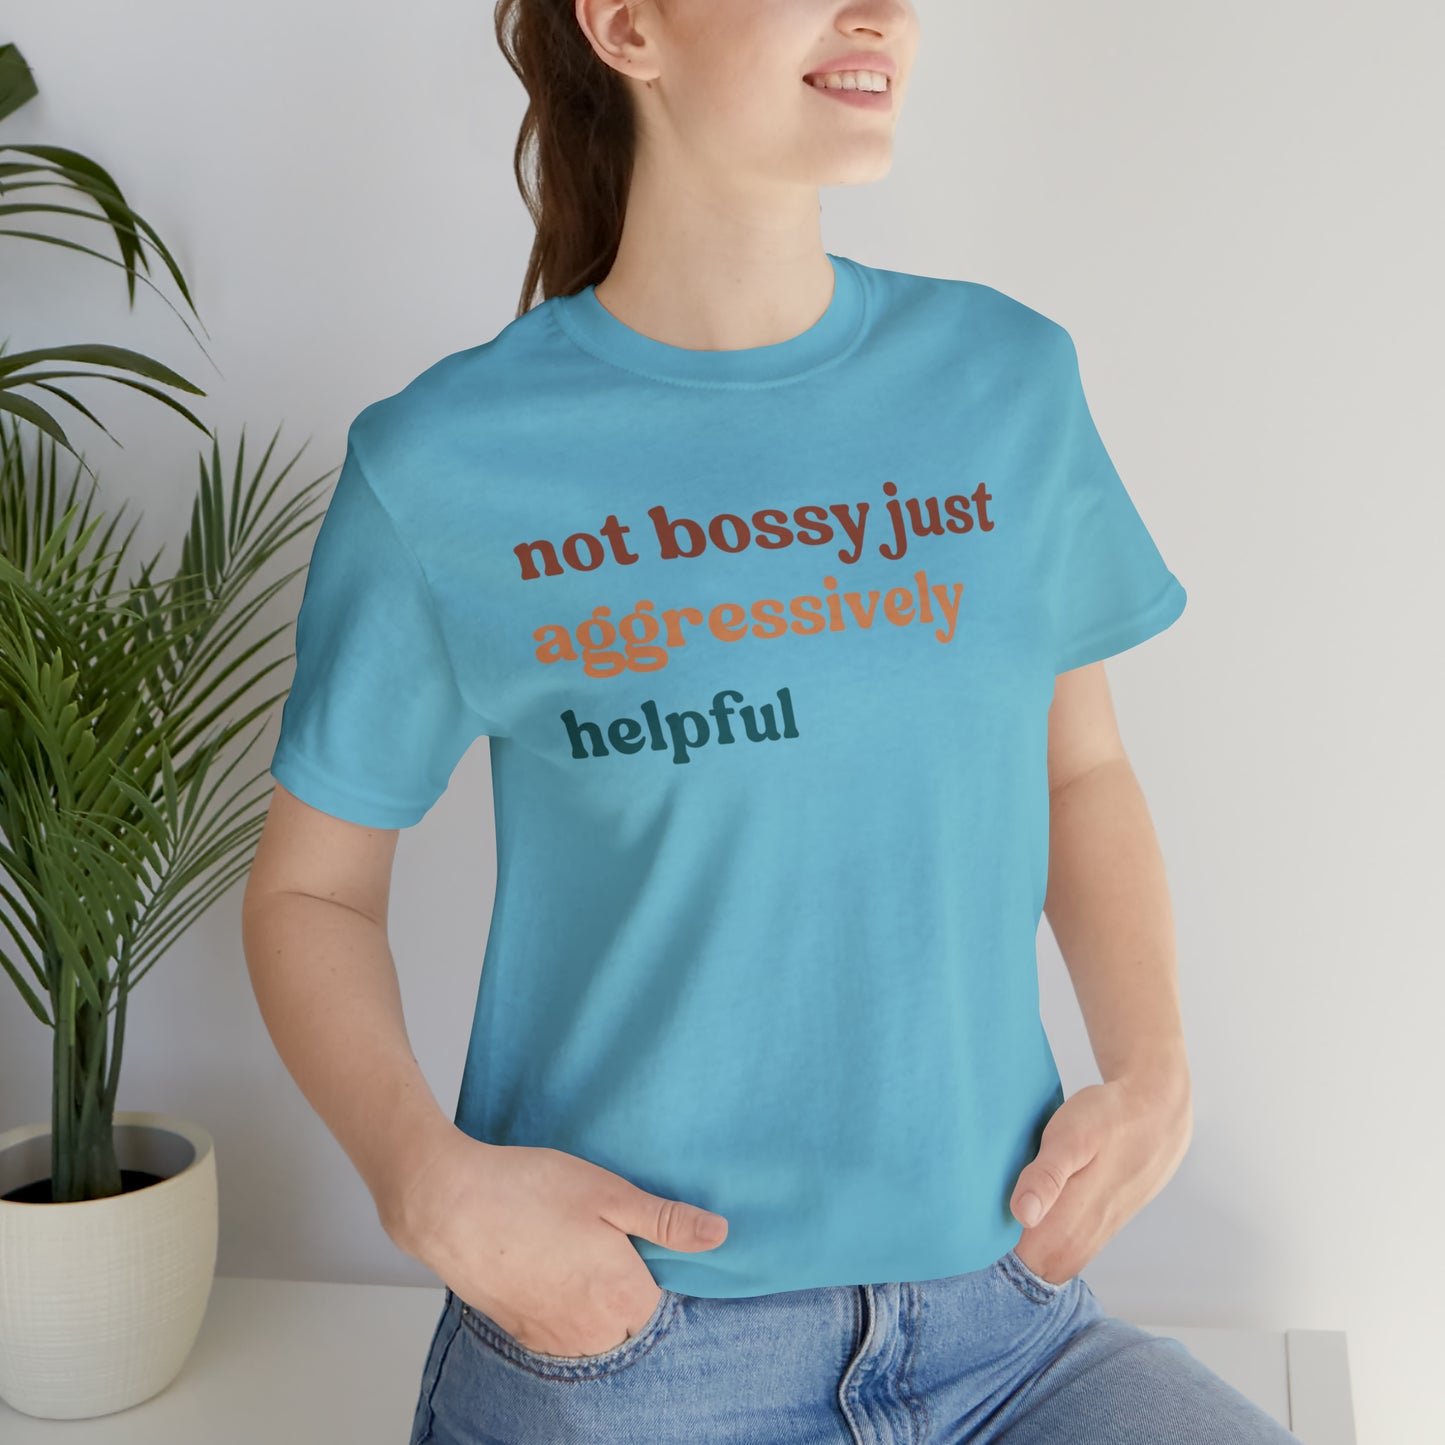 Not Bossy Just Aggressively Helpful Shirt, Bossy Mom Shirt, Shirt for Women, Sarcasm Shirt, Sarcastic Mom Shirt, T58